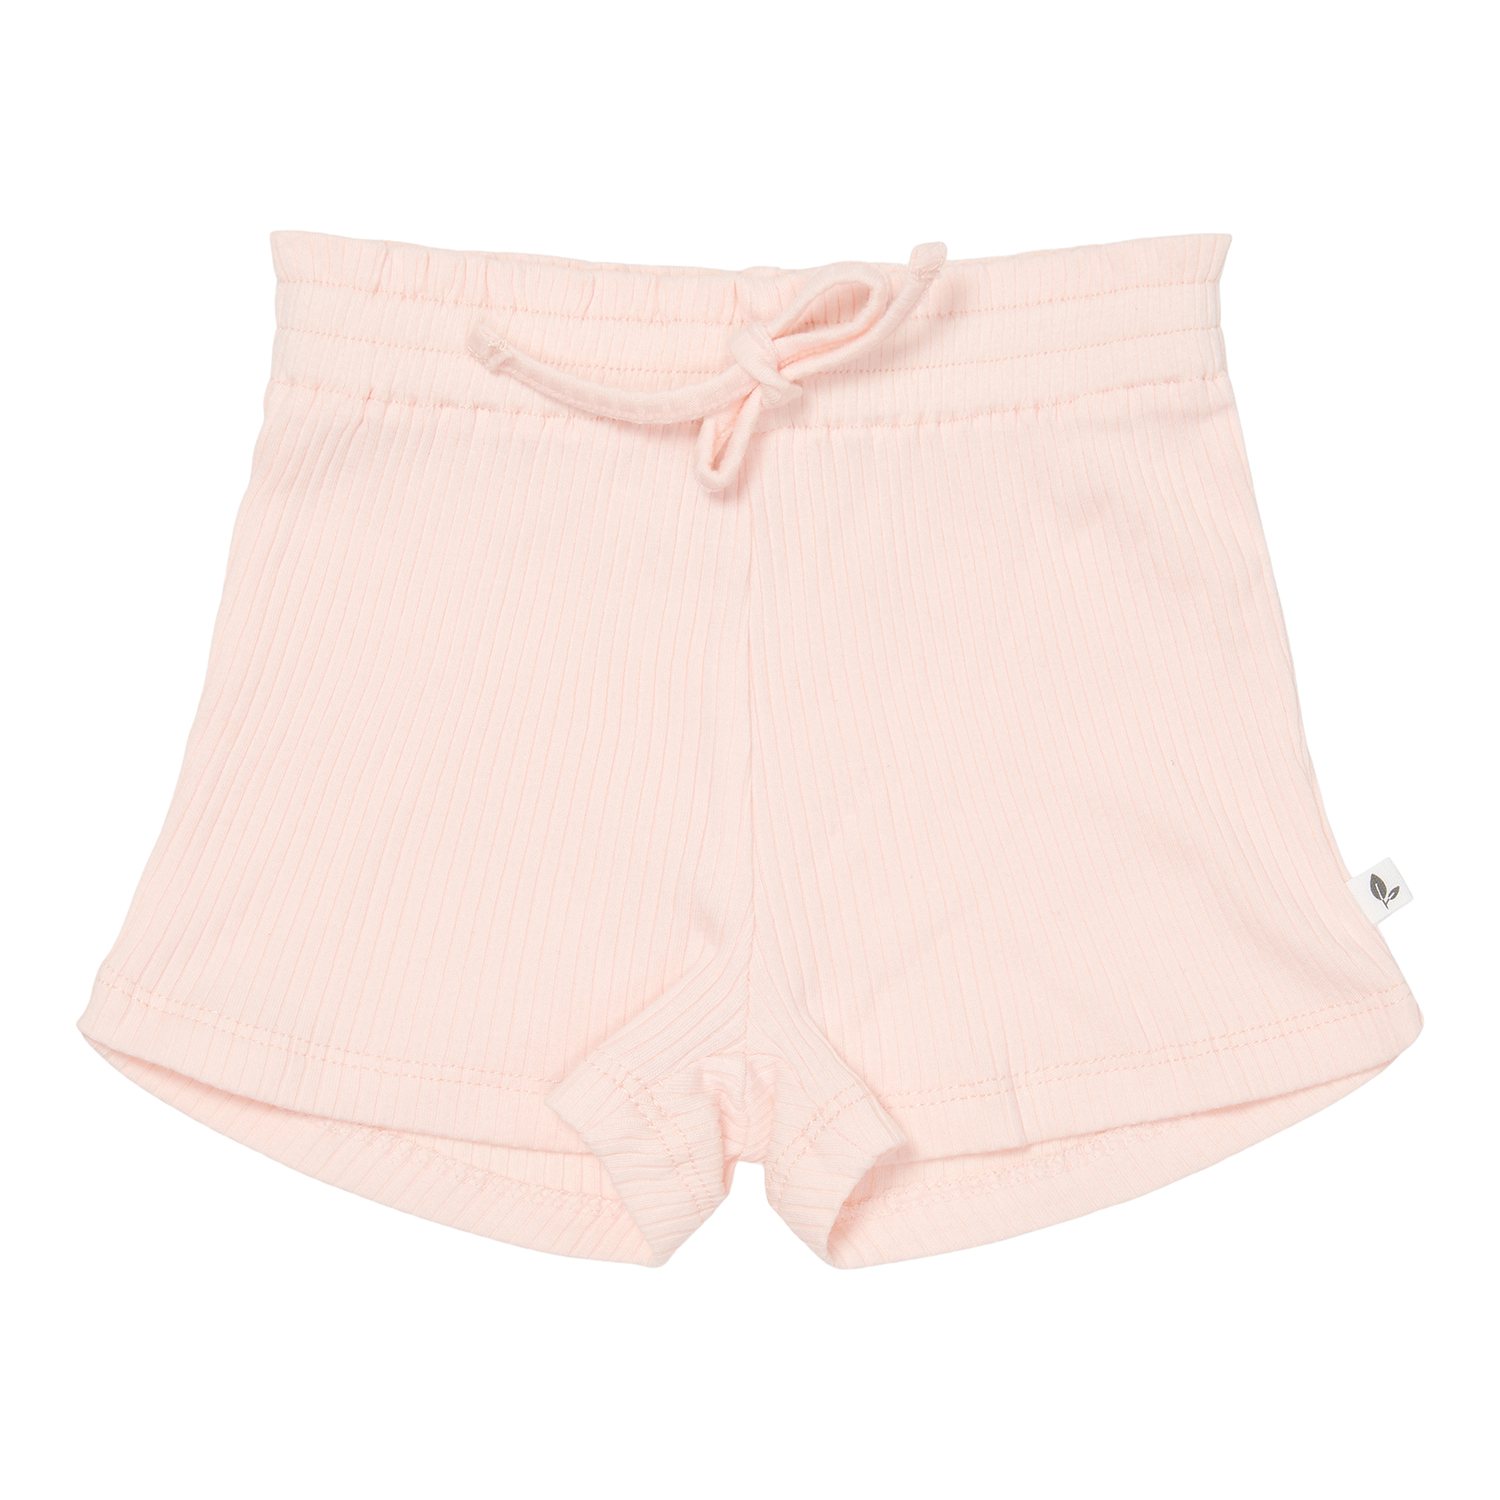 Kurze Hose / Shorts Rippe Pure soft pink (Gr. 62)